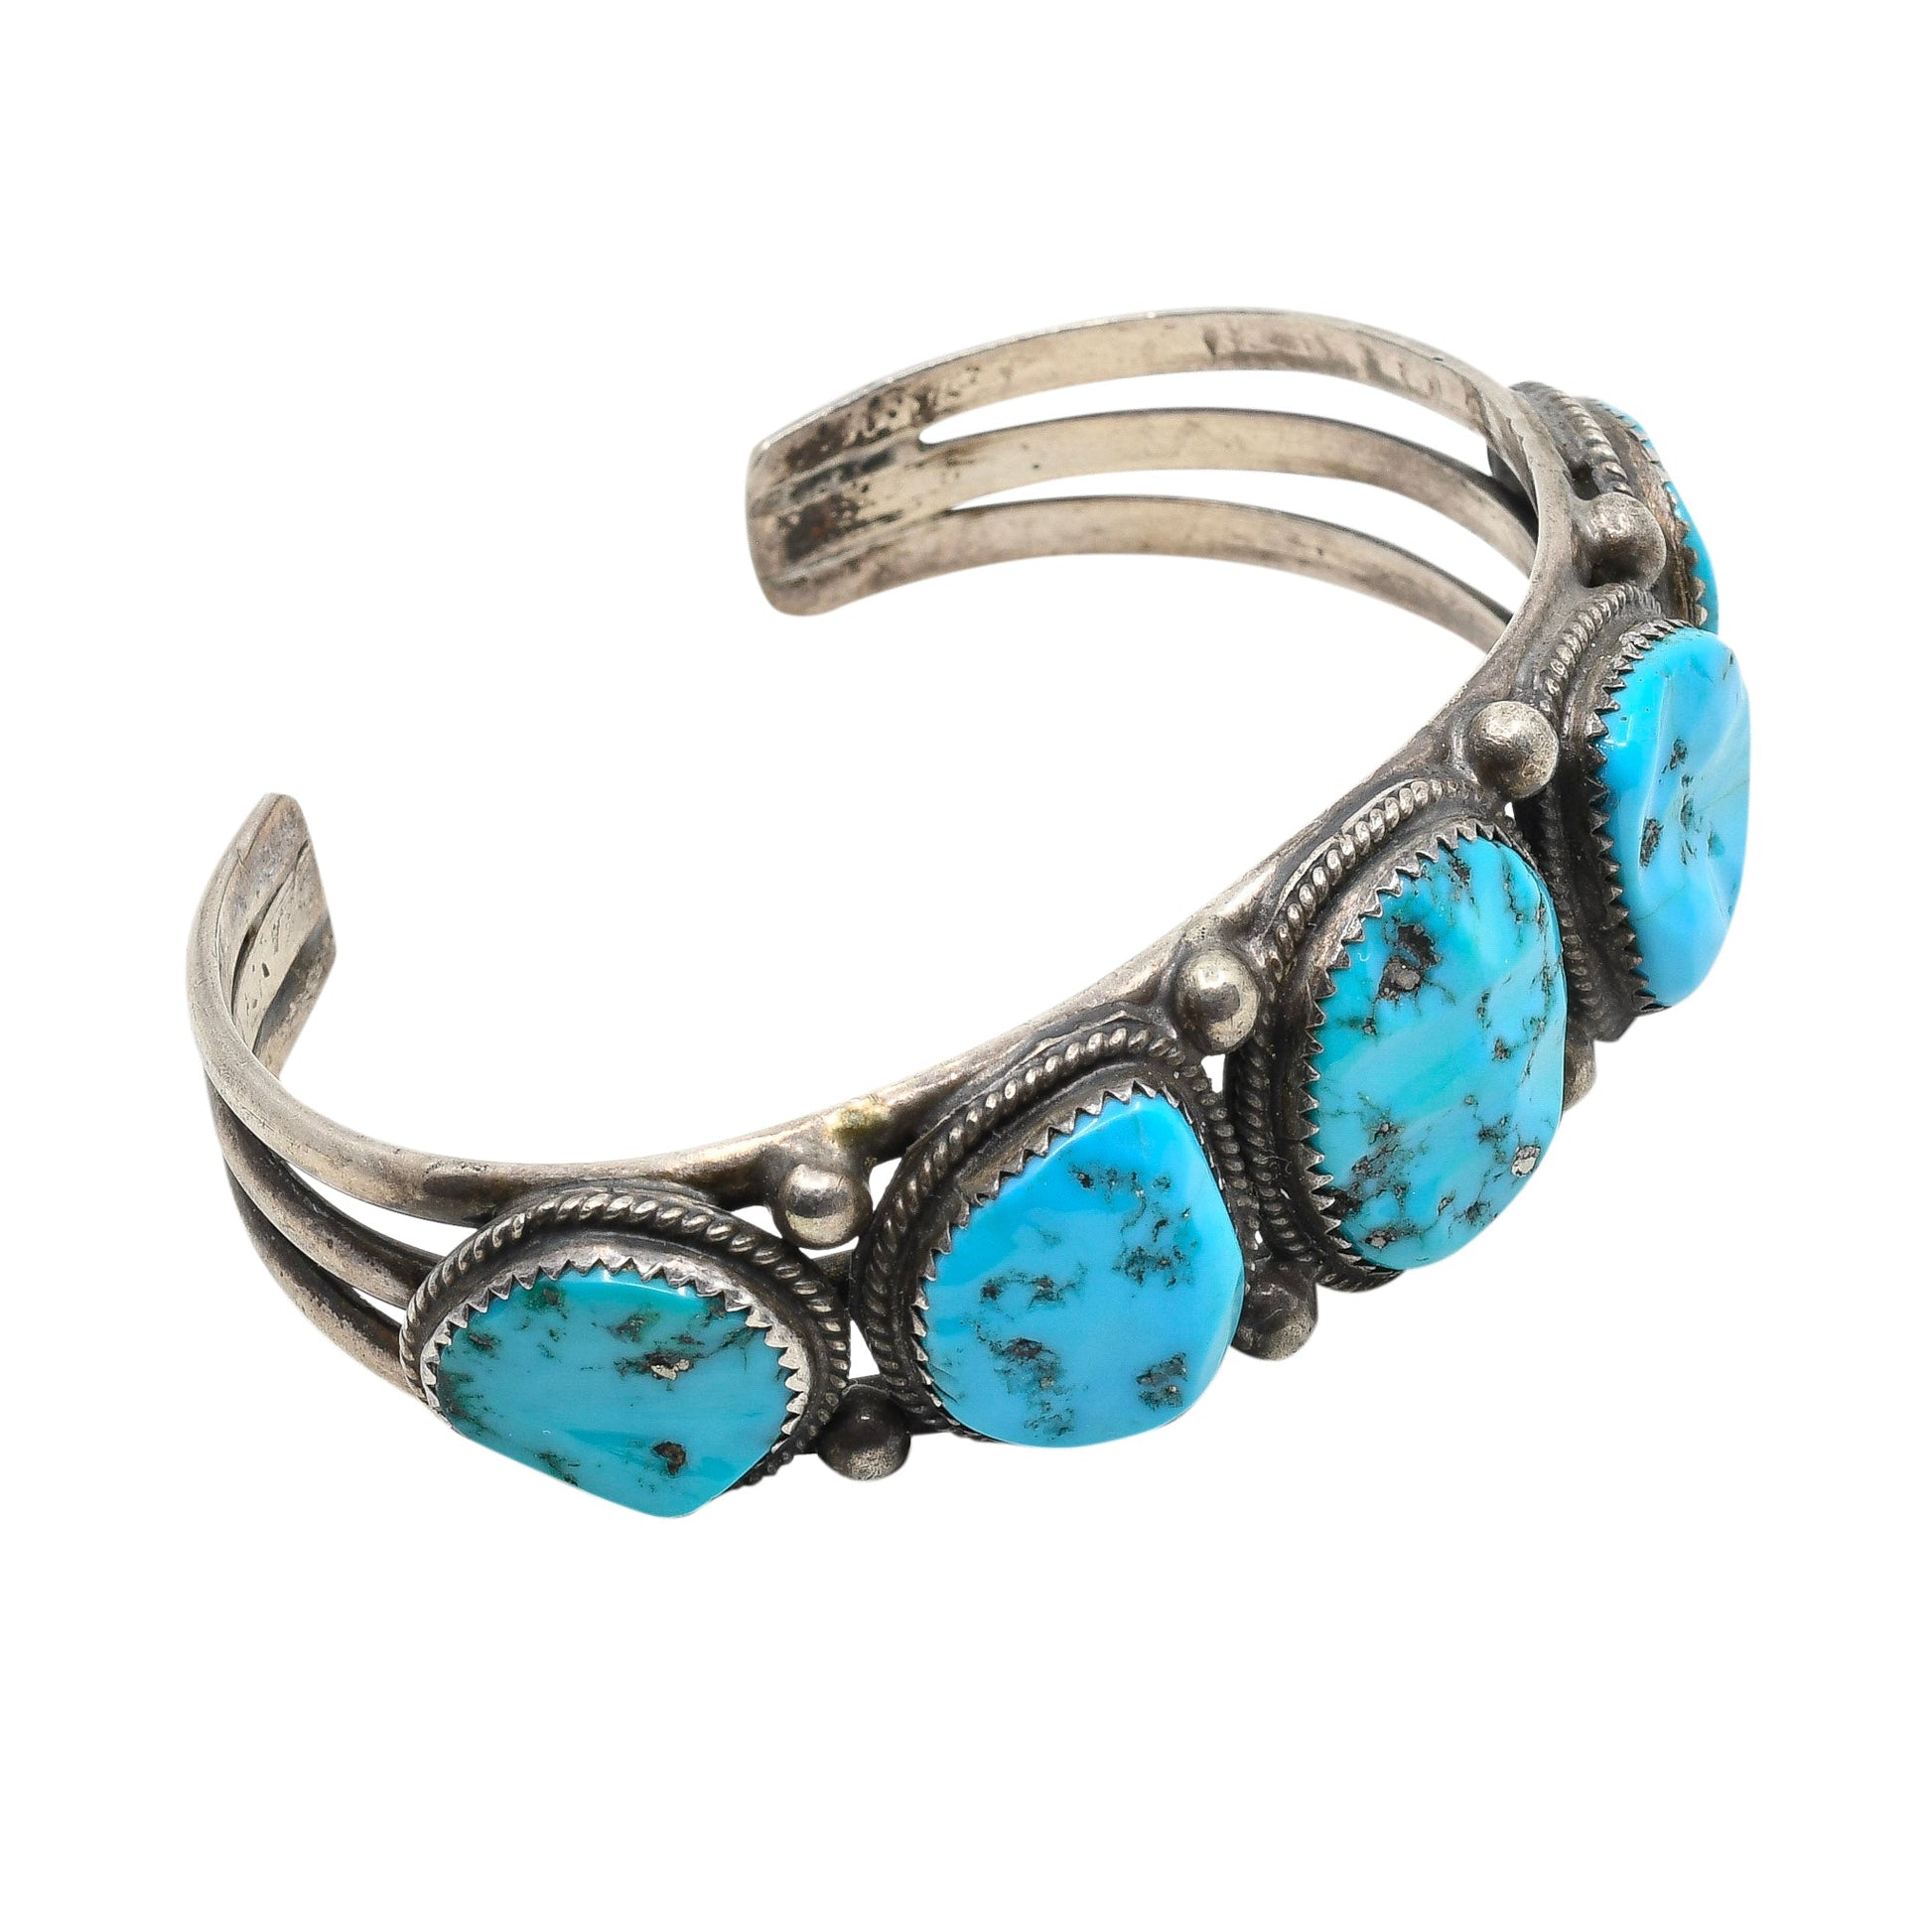 Vintage Navajo Bracelet With Handcut Turquoise Stones - Turquoise & Tufa